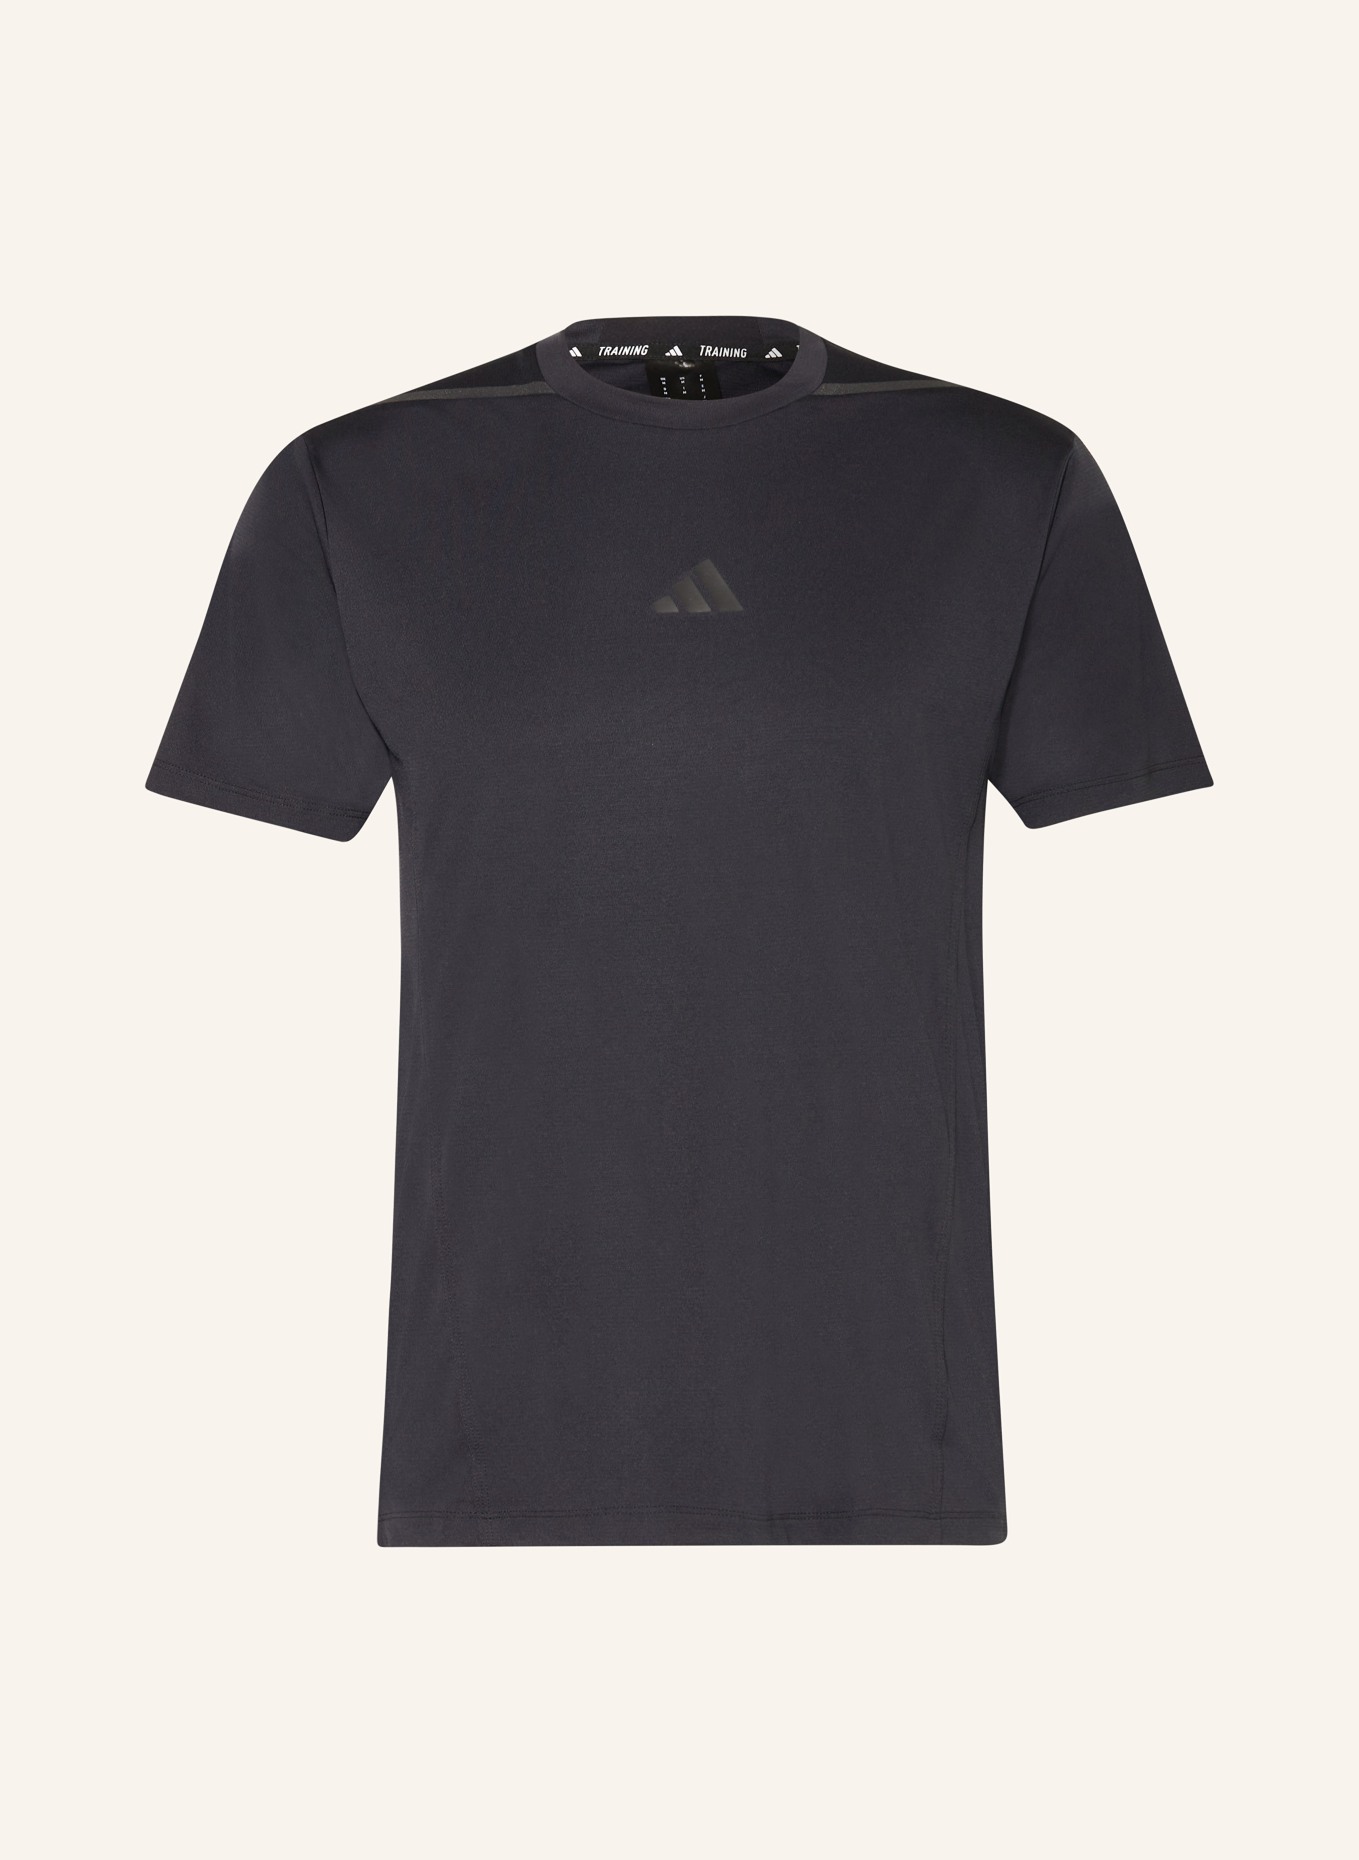 adidas T-Shirt DESIGNED FOR TRAINING ADISTRONG, Farbe: SCHWARZ (Bild 1)